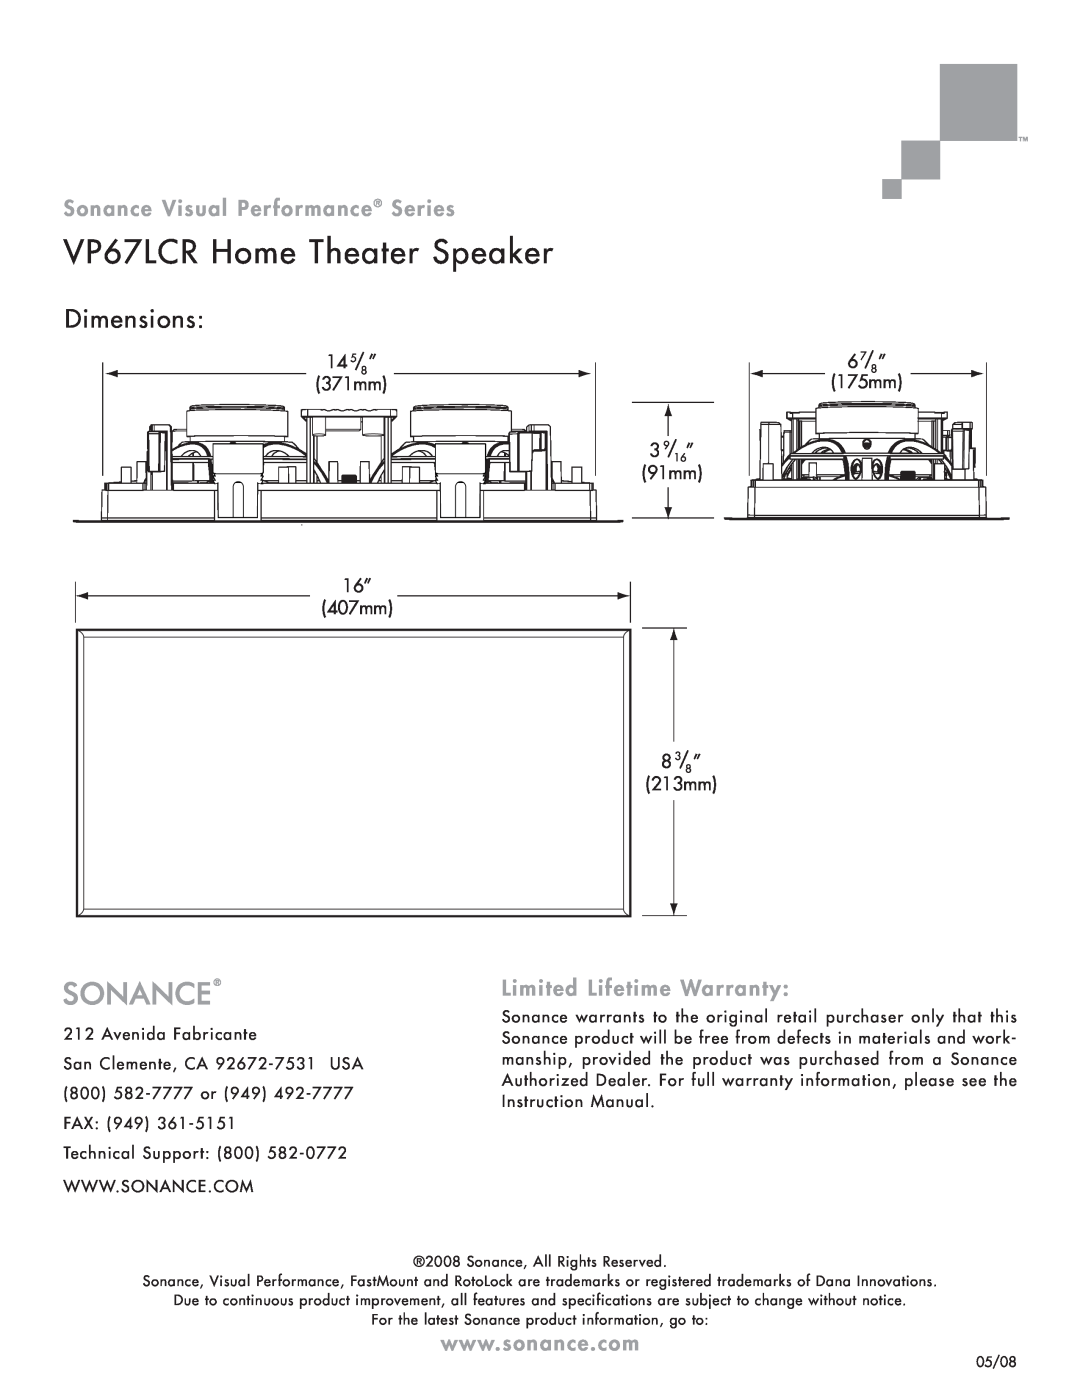 Sonance VP67 LCR Dimensions, Limited Lifetime Warranty, VP67LCR Home Theater Speaker, Sonance Visual Performance Series 